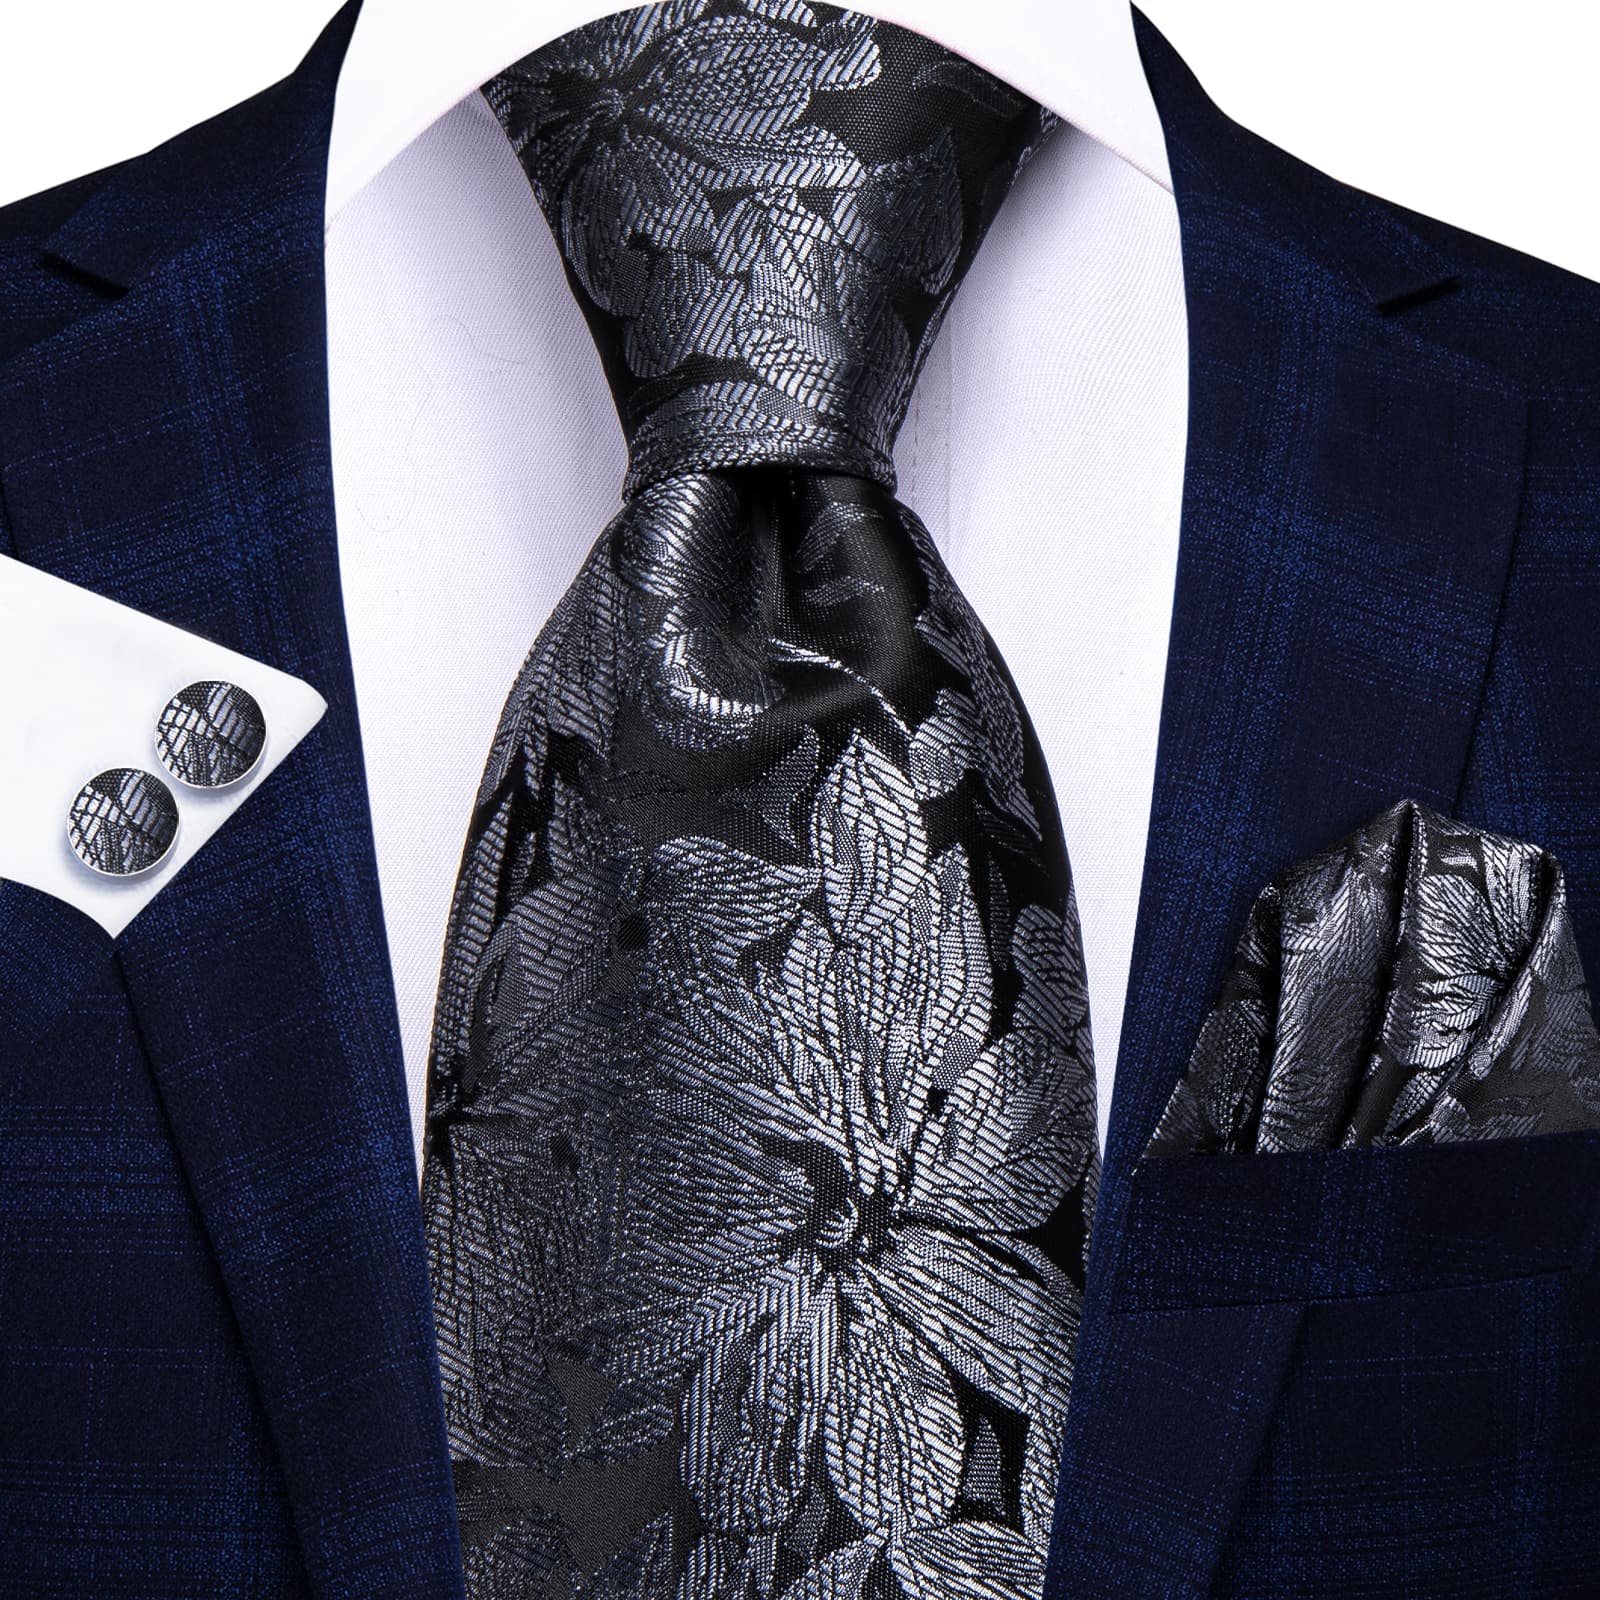 Blue suit grey necktie for men at wedding 